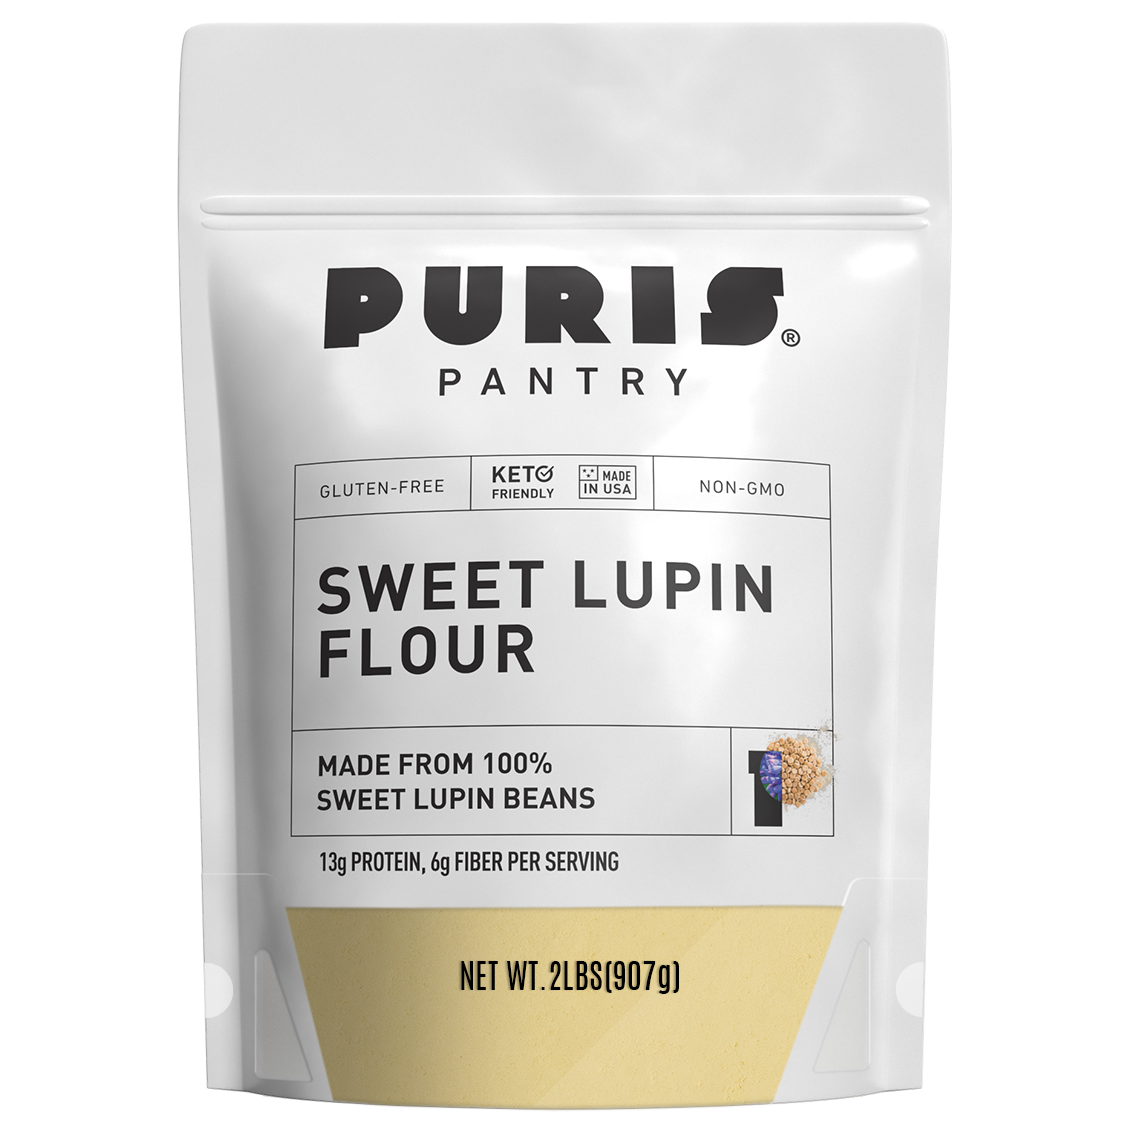 PURIS Sweet Lupin Flour - Wholesale/Bulk cases